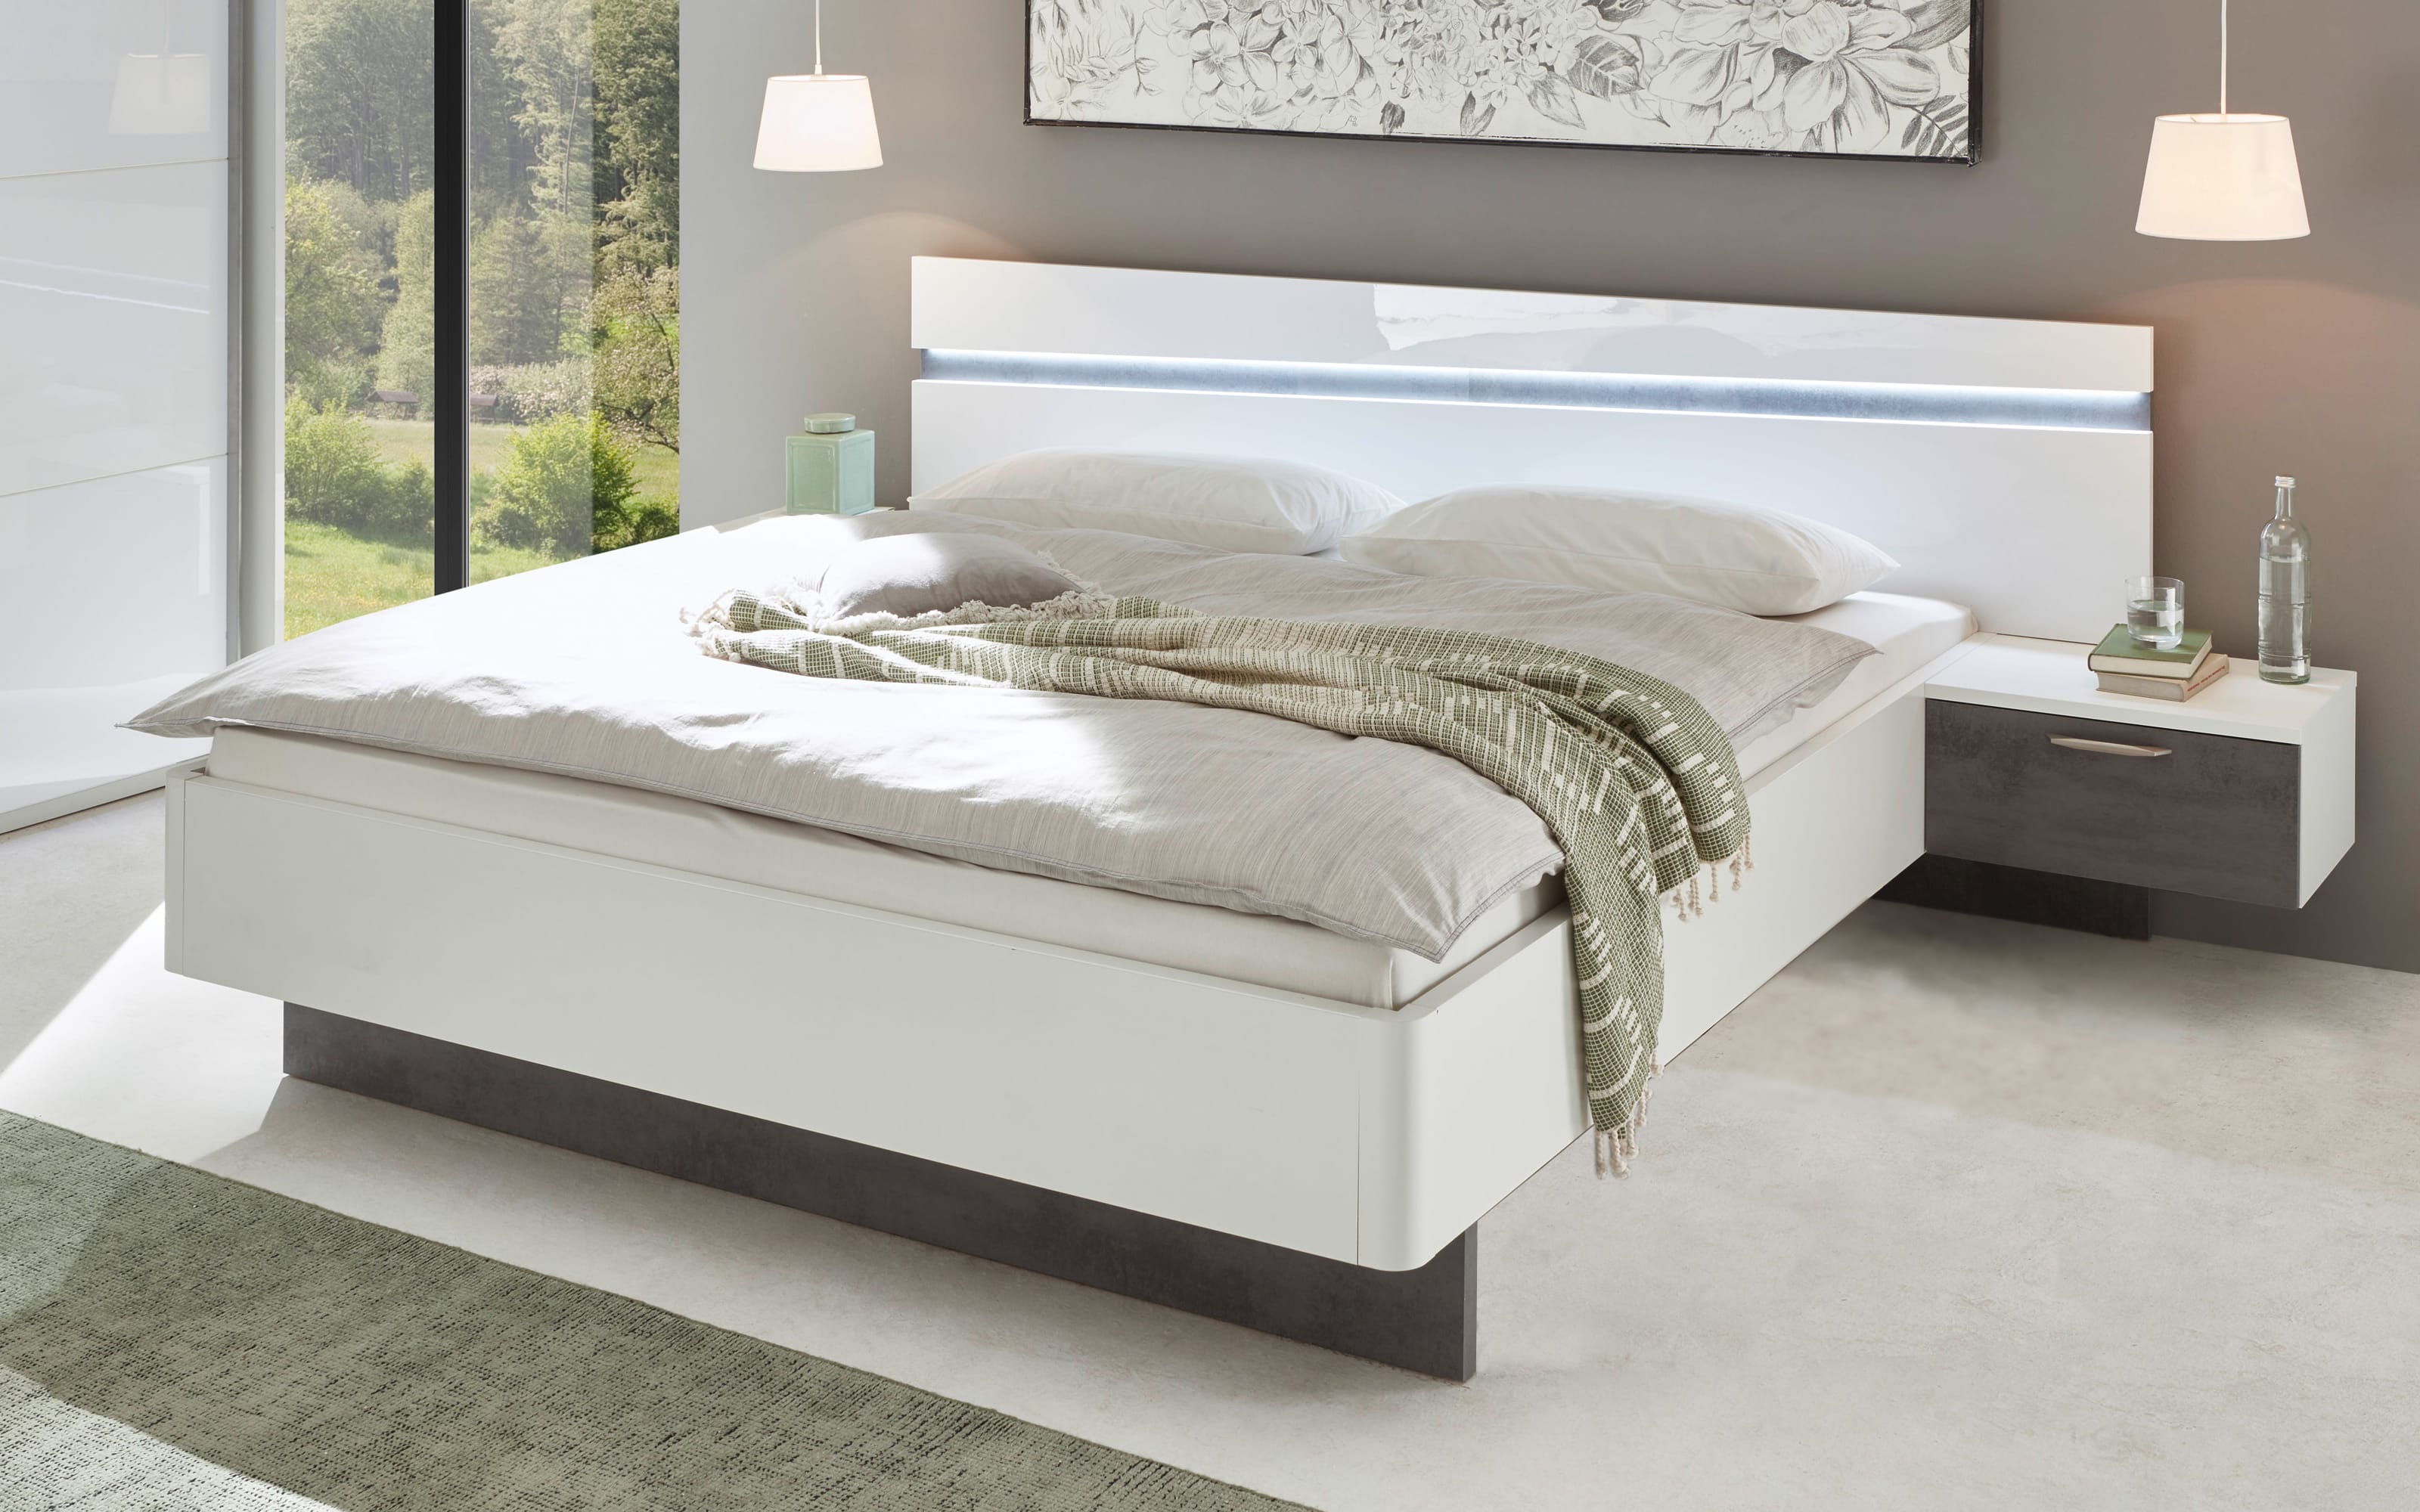 Bett mit Nachtkonsolen Sharp in weiß hochglanz, inklusive LED-Beleuchtung, Liegefläche ca. 180 x 200 cm